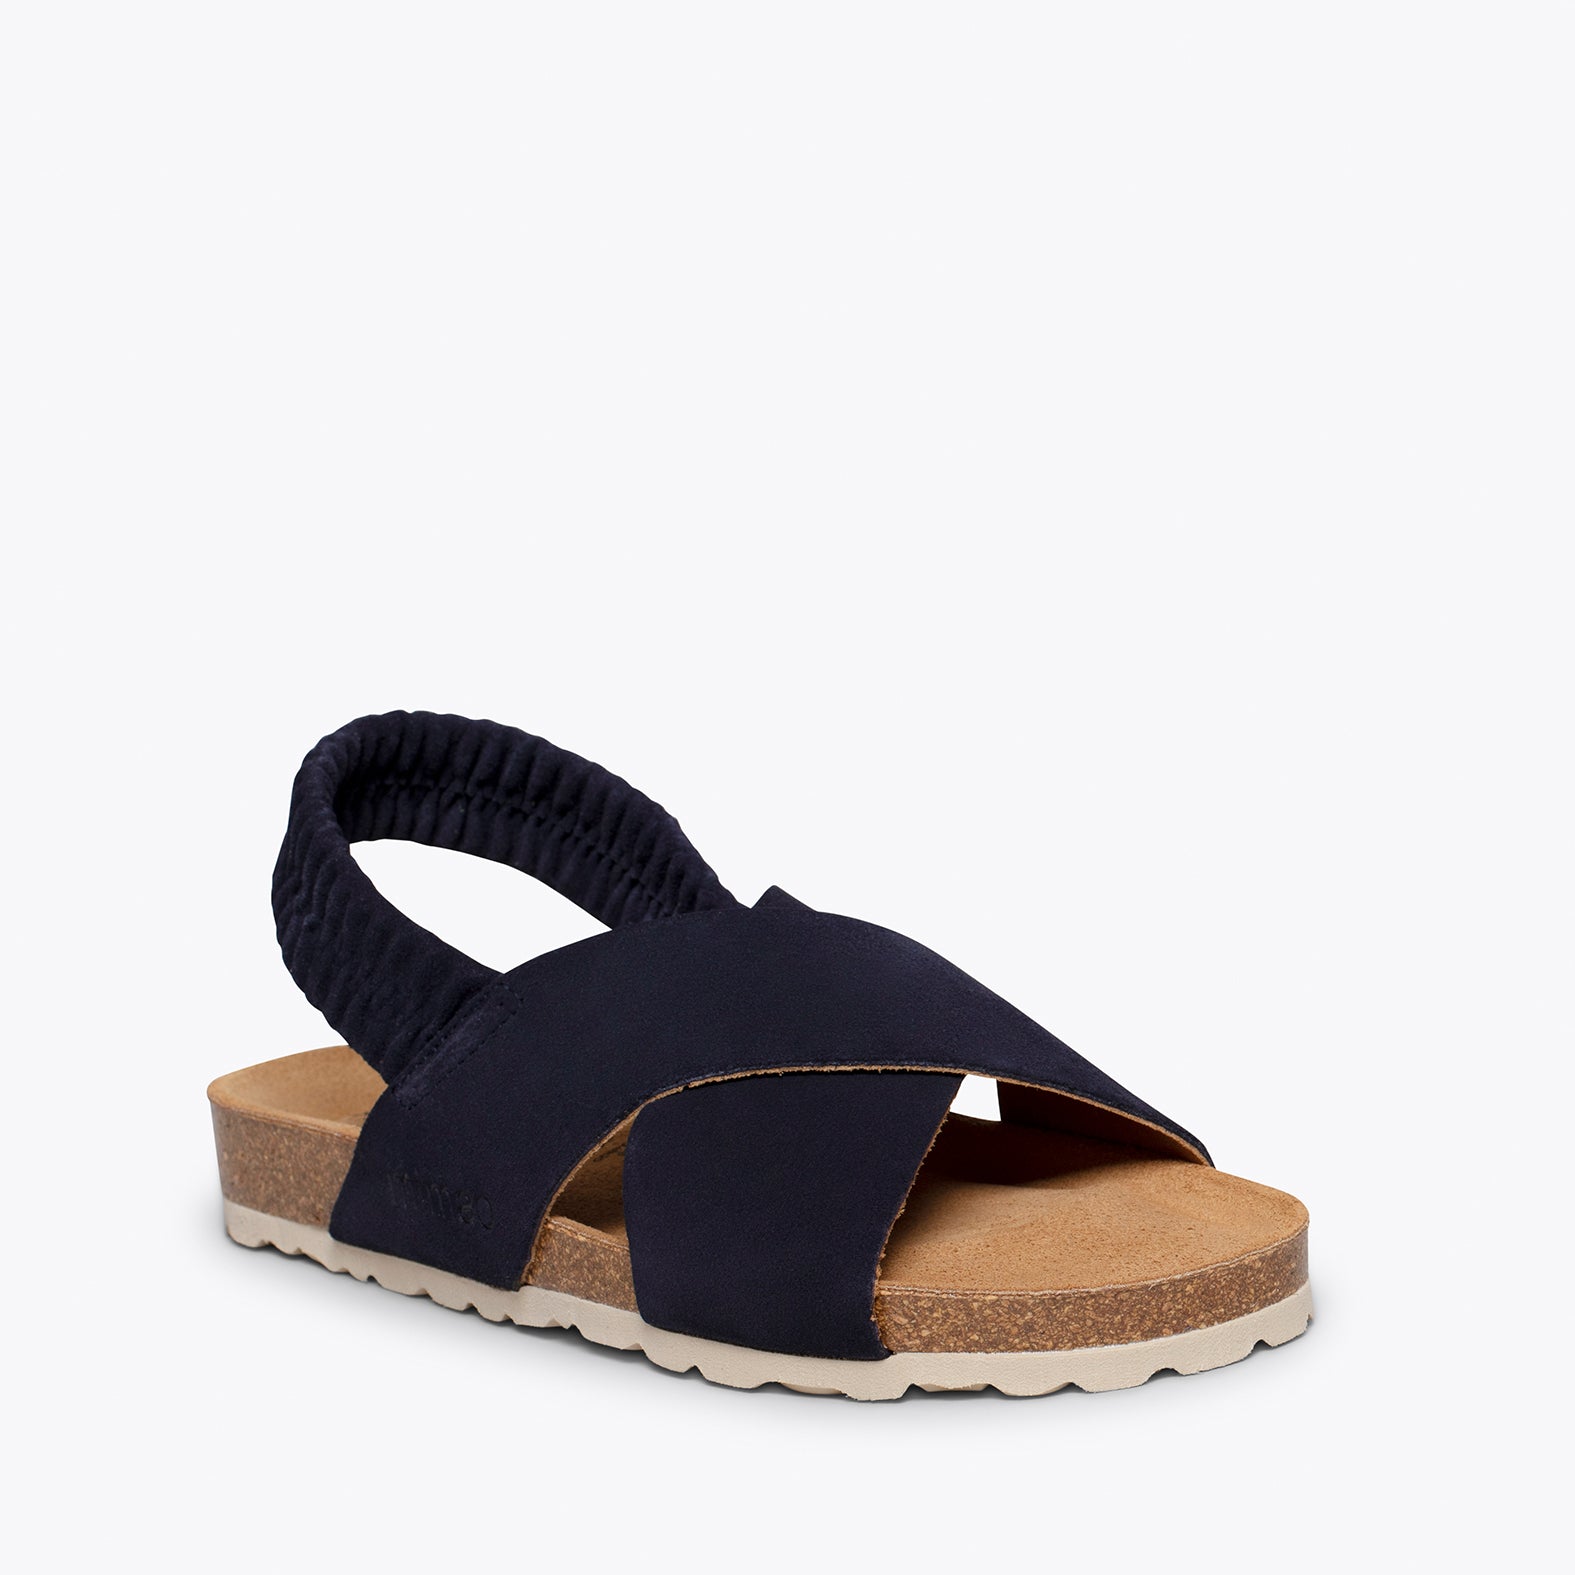 PALMERA – NAVY bio sandal with elastic band